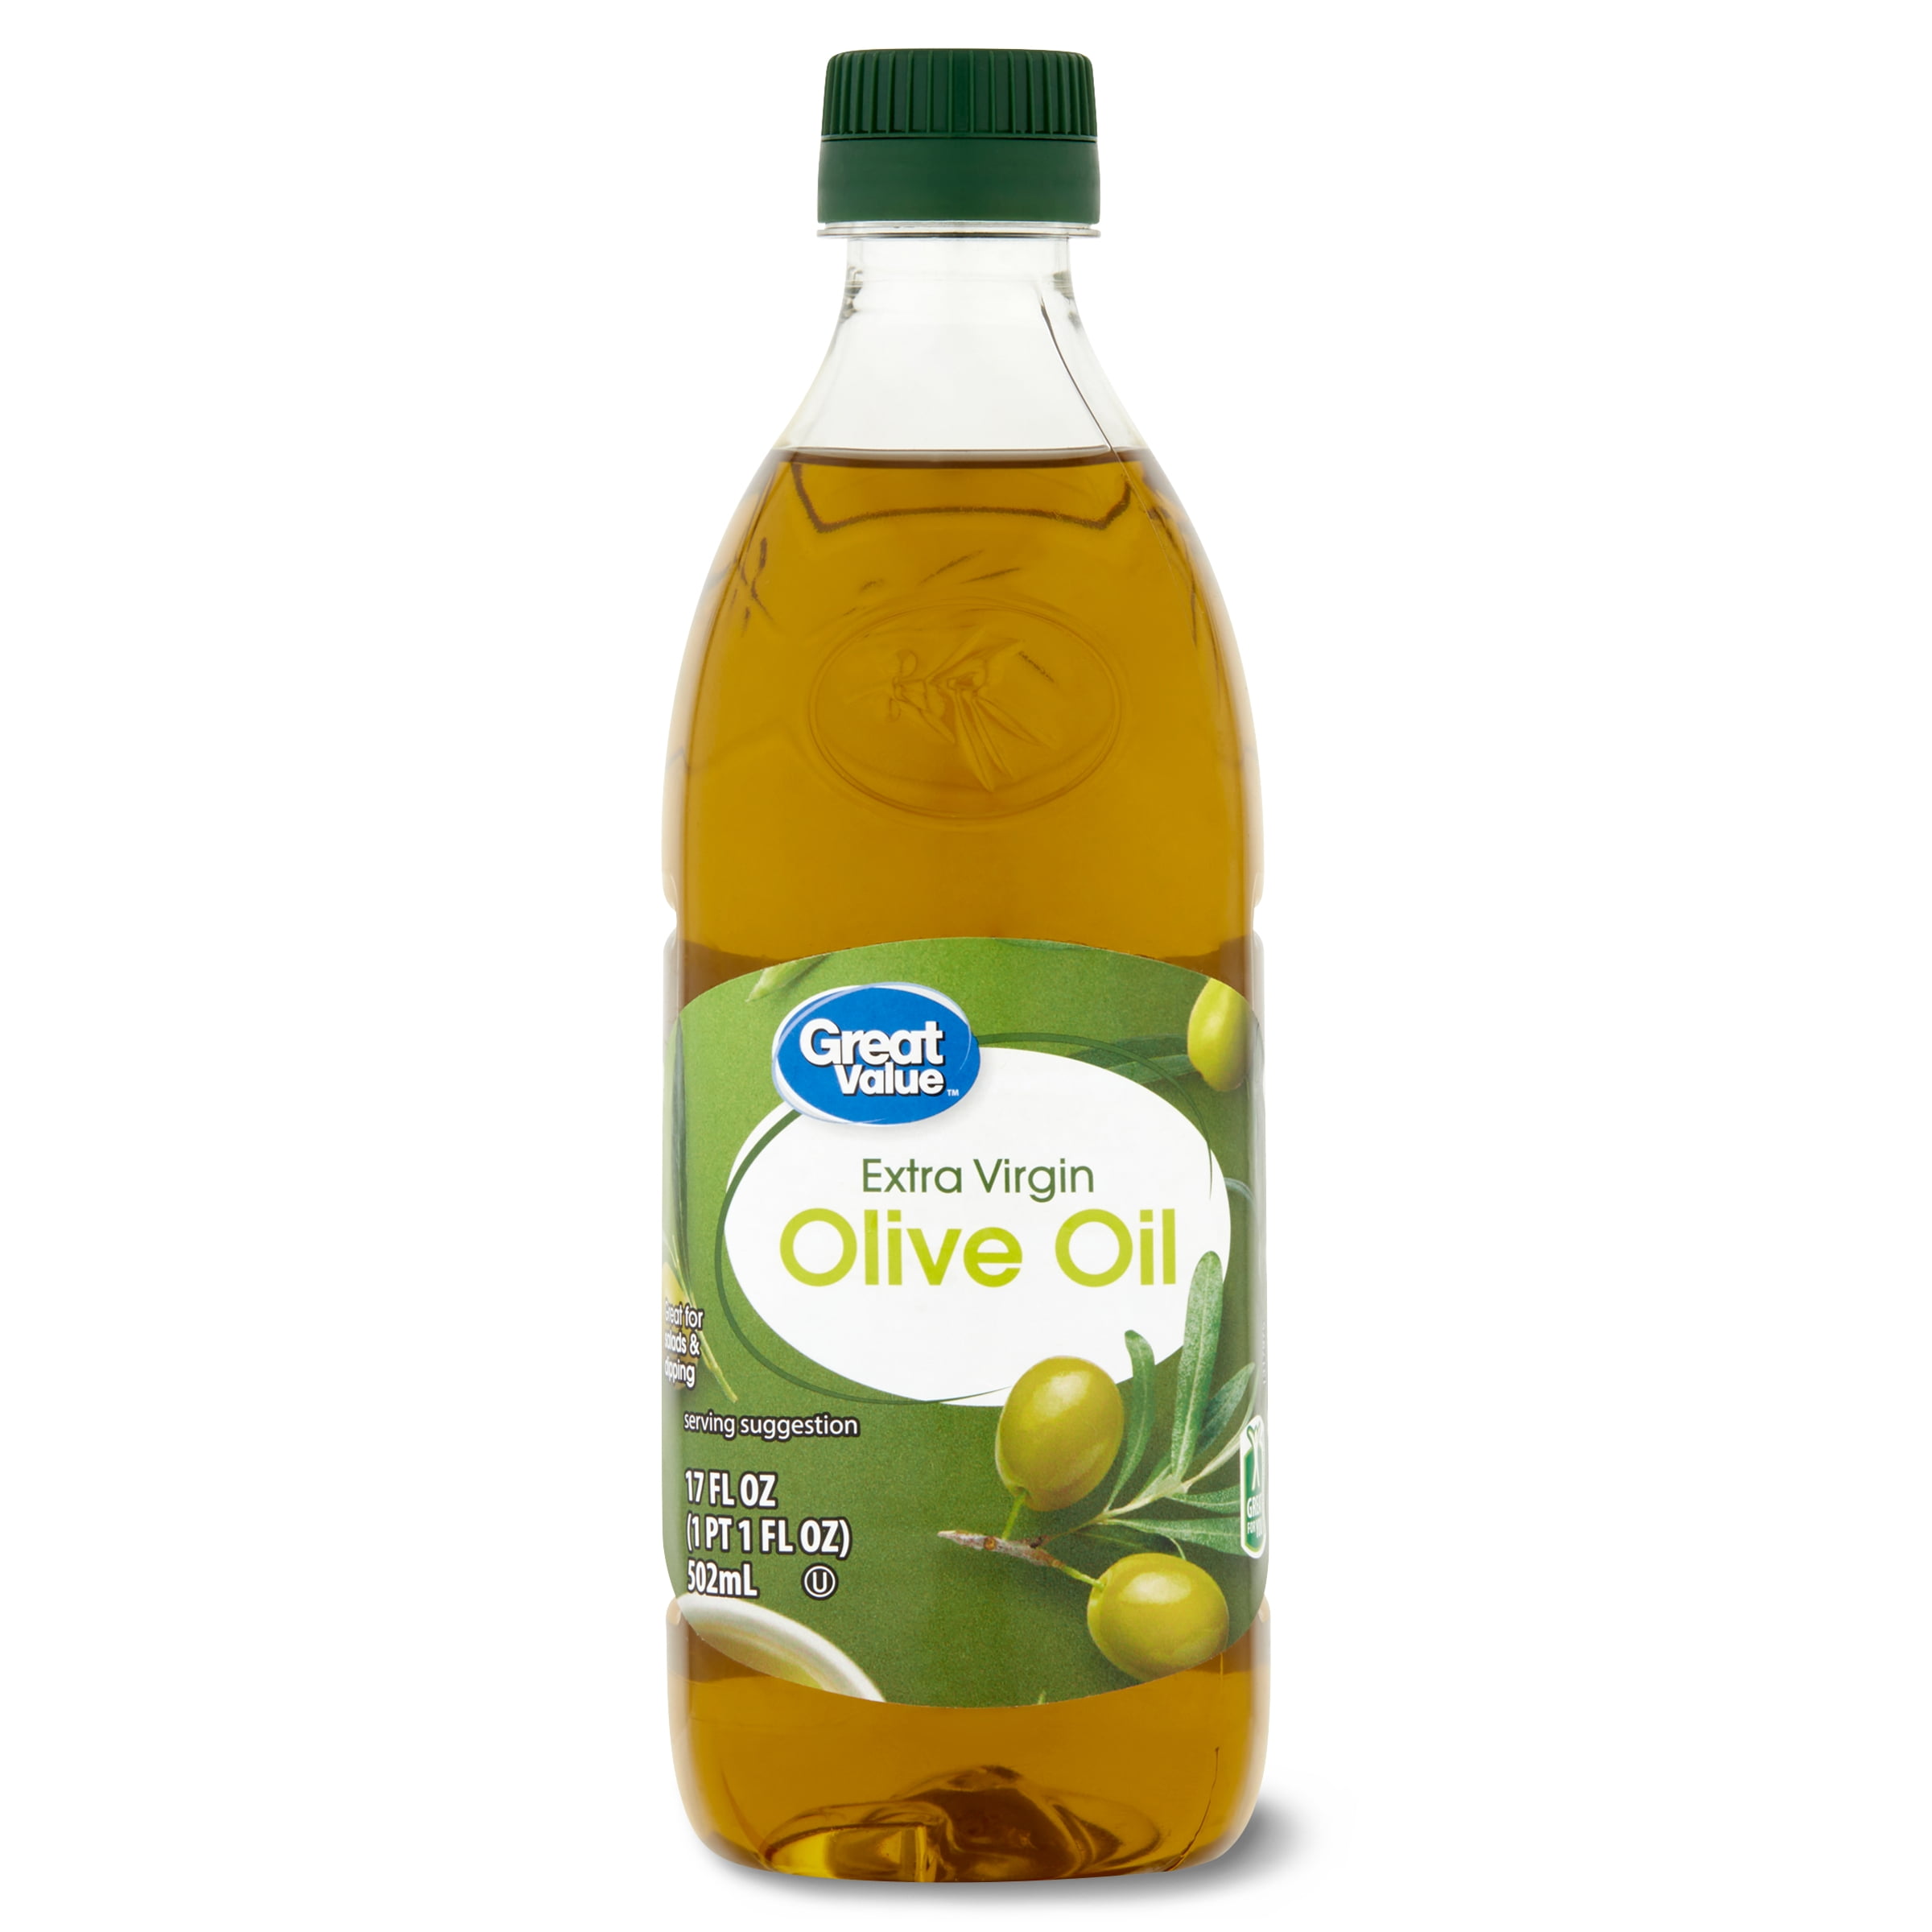 Great Value Extra Virgin Olive Oil, 17 fl oz